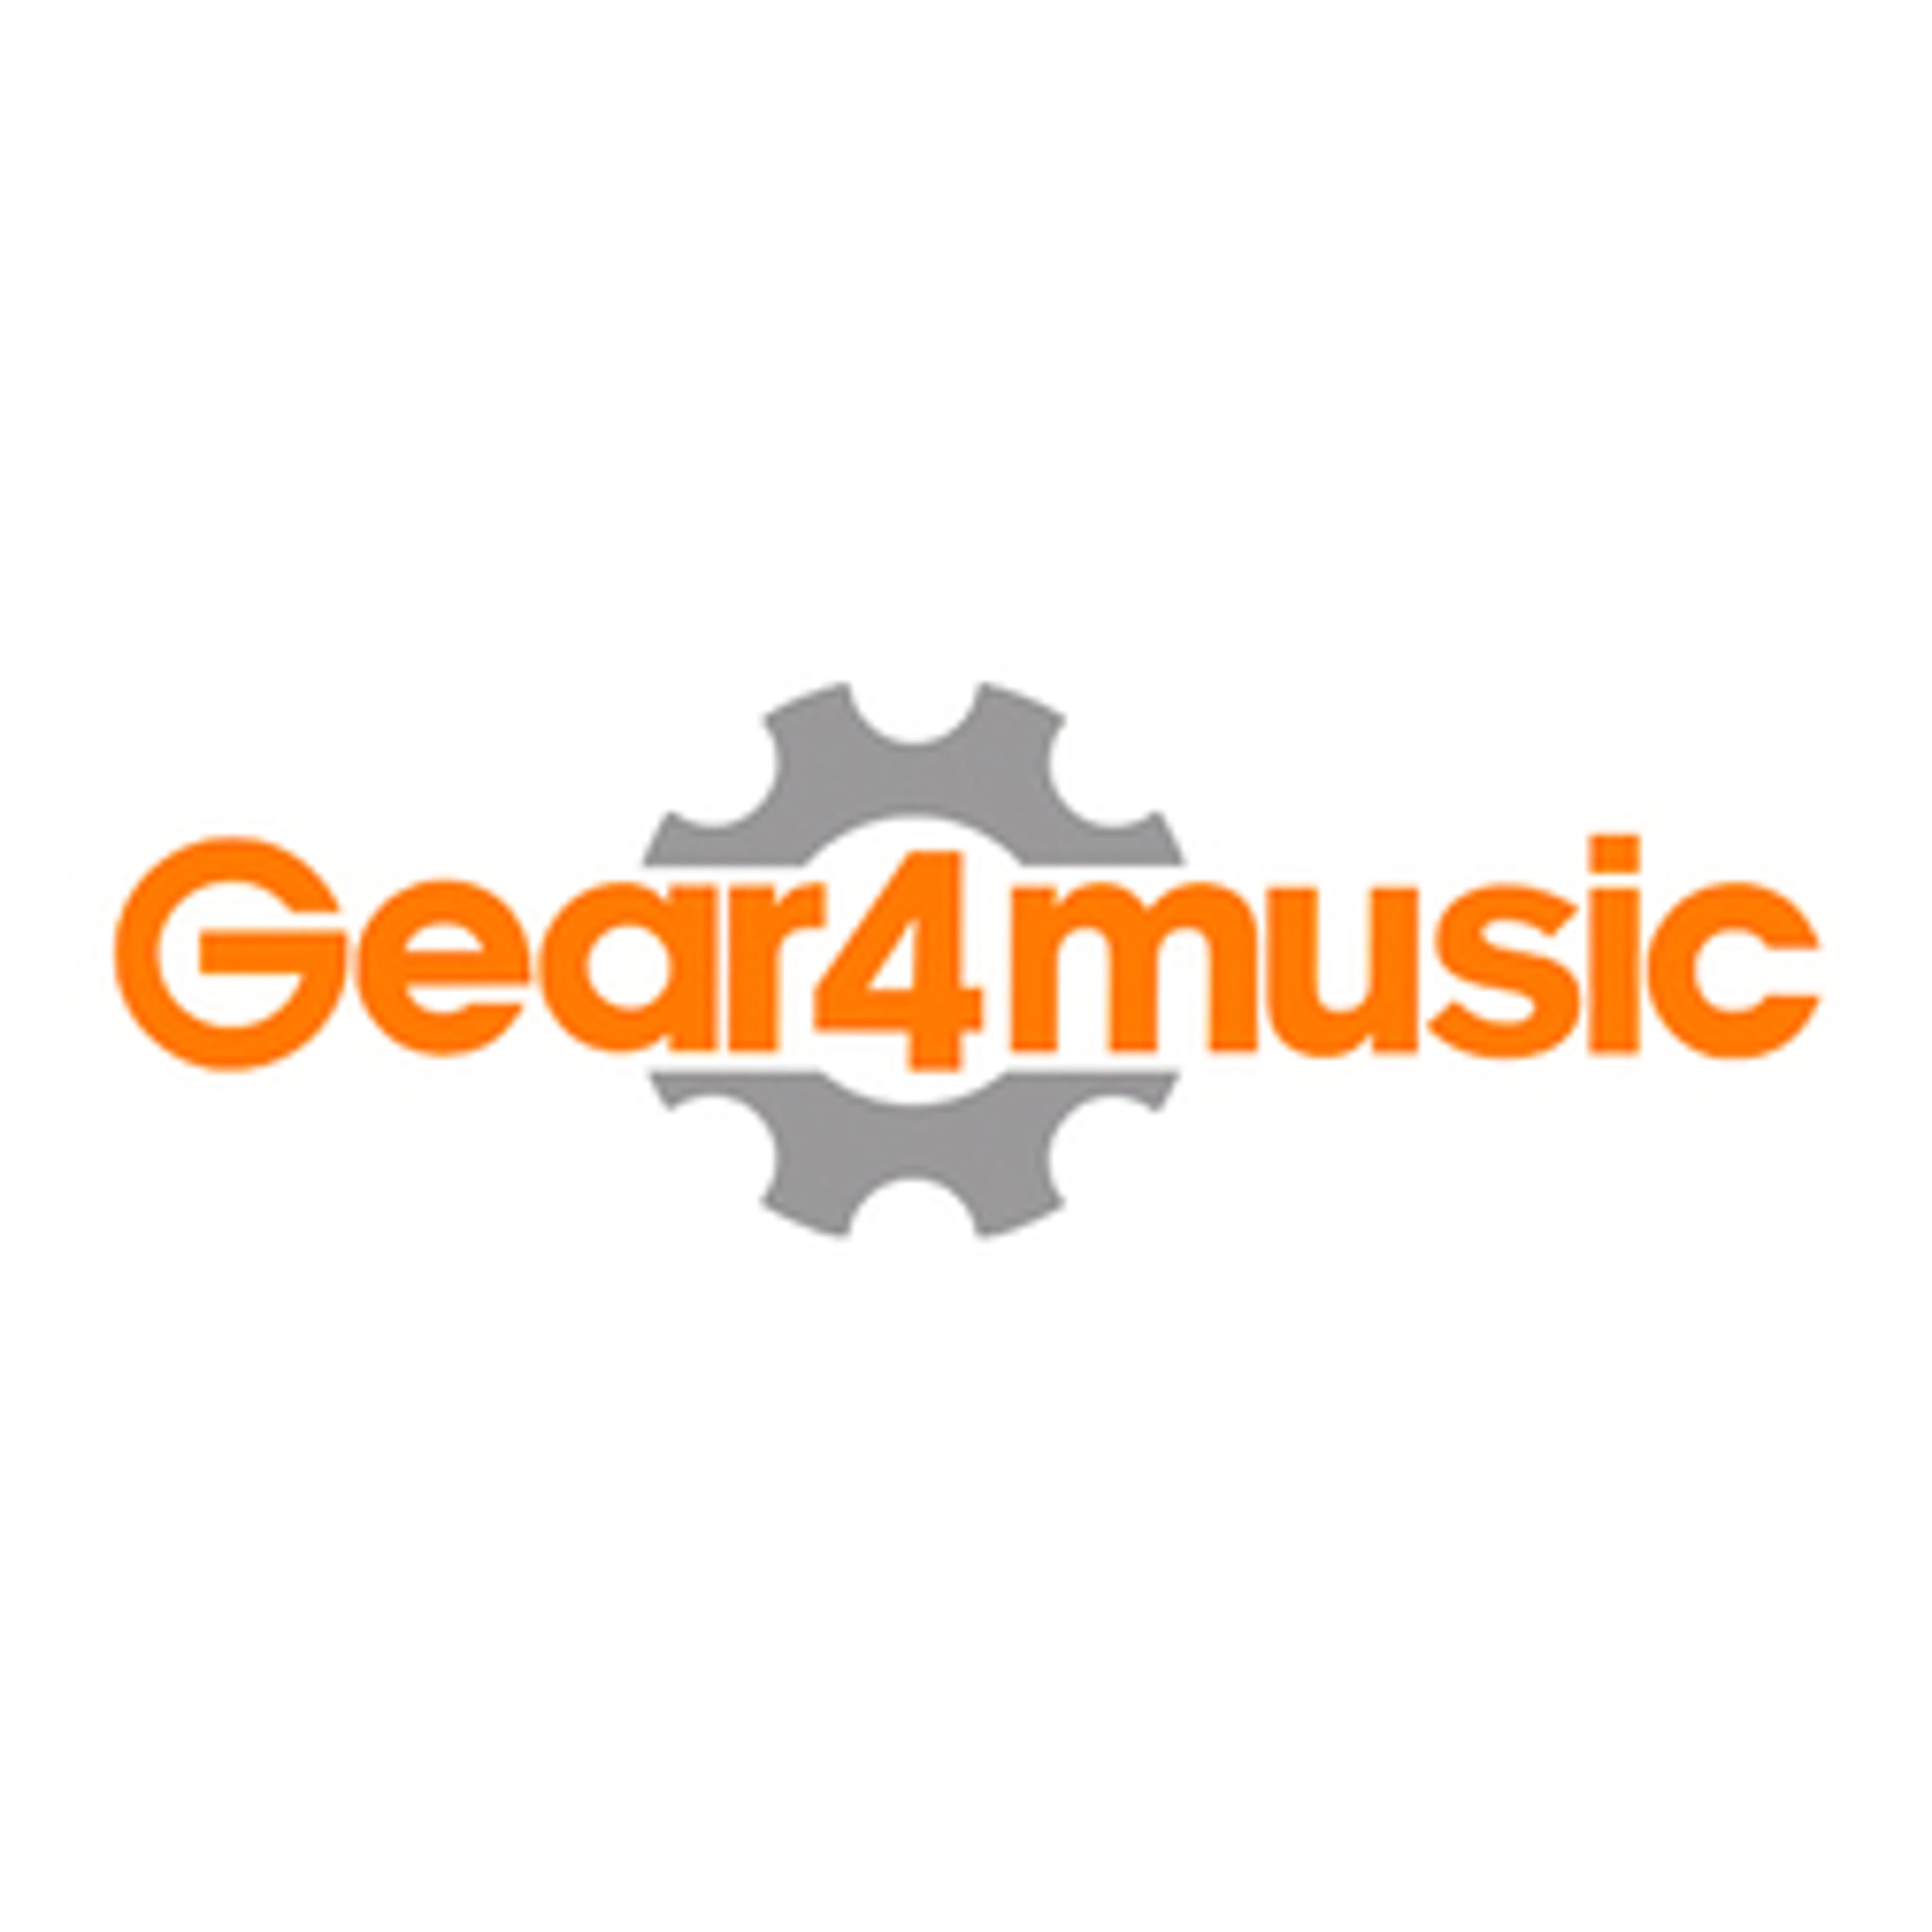  Gear4music 